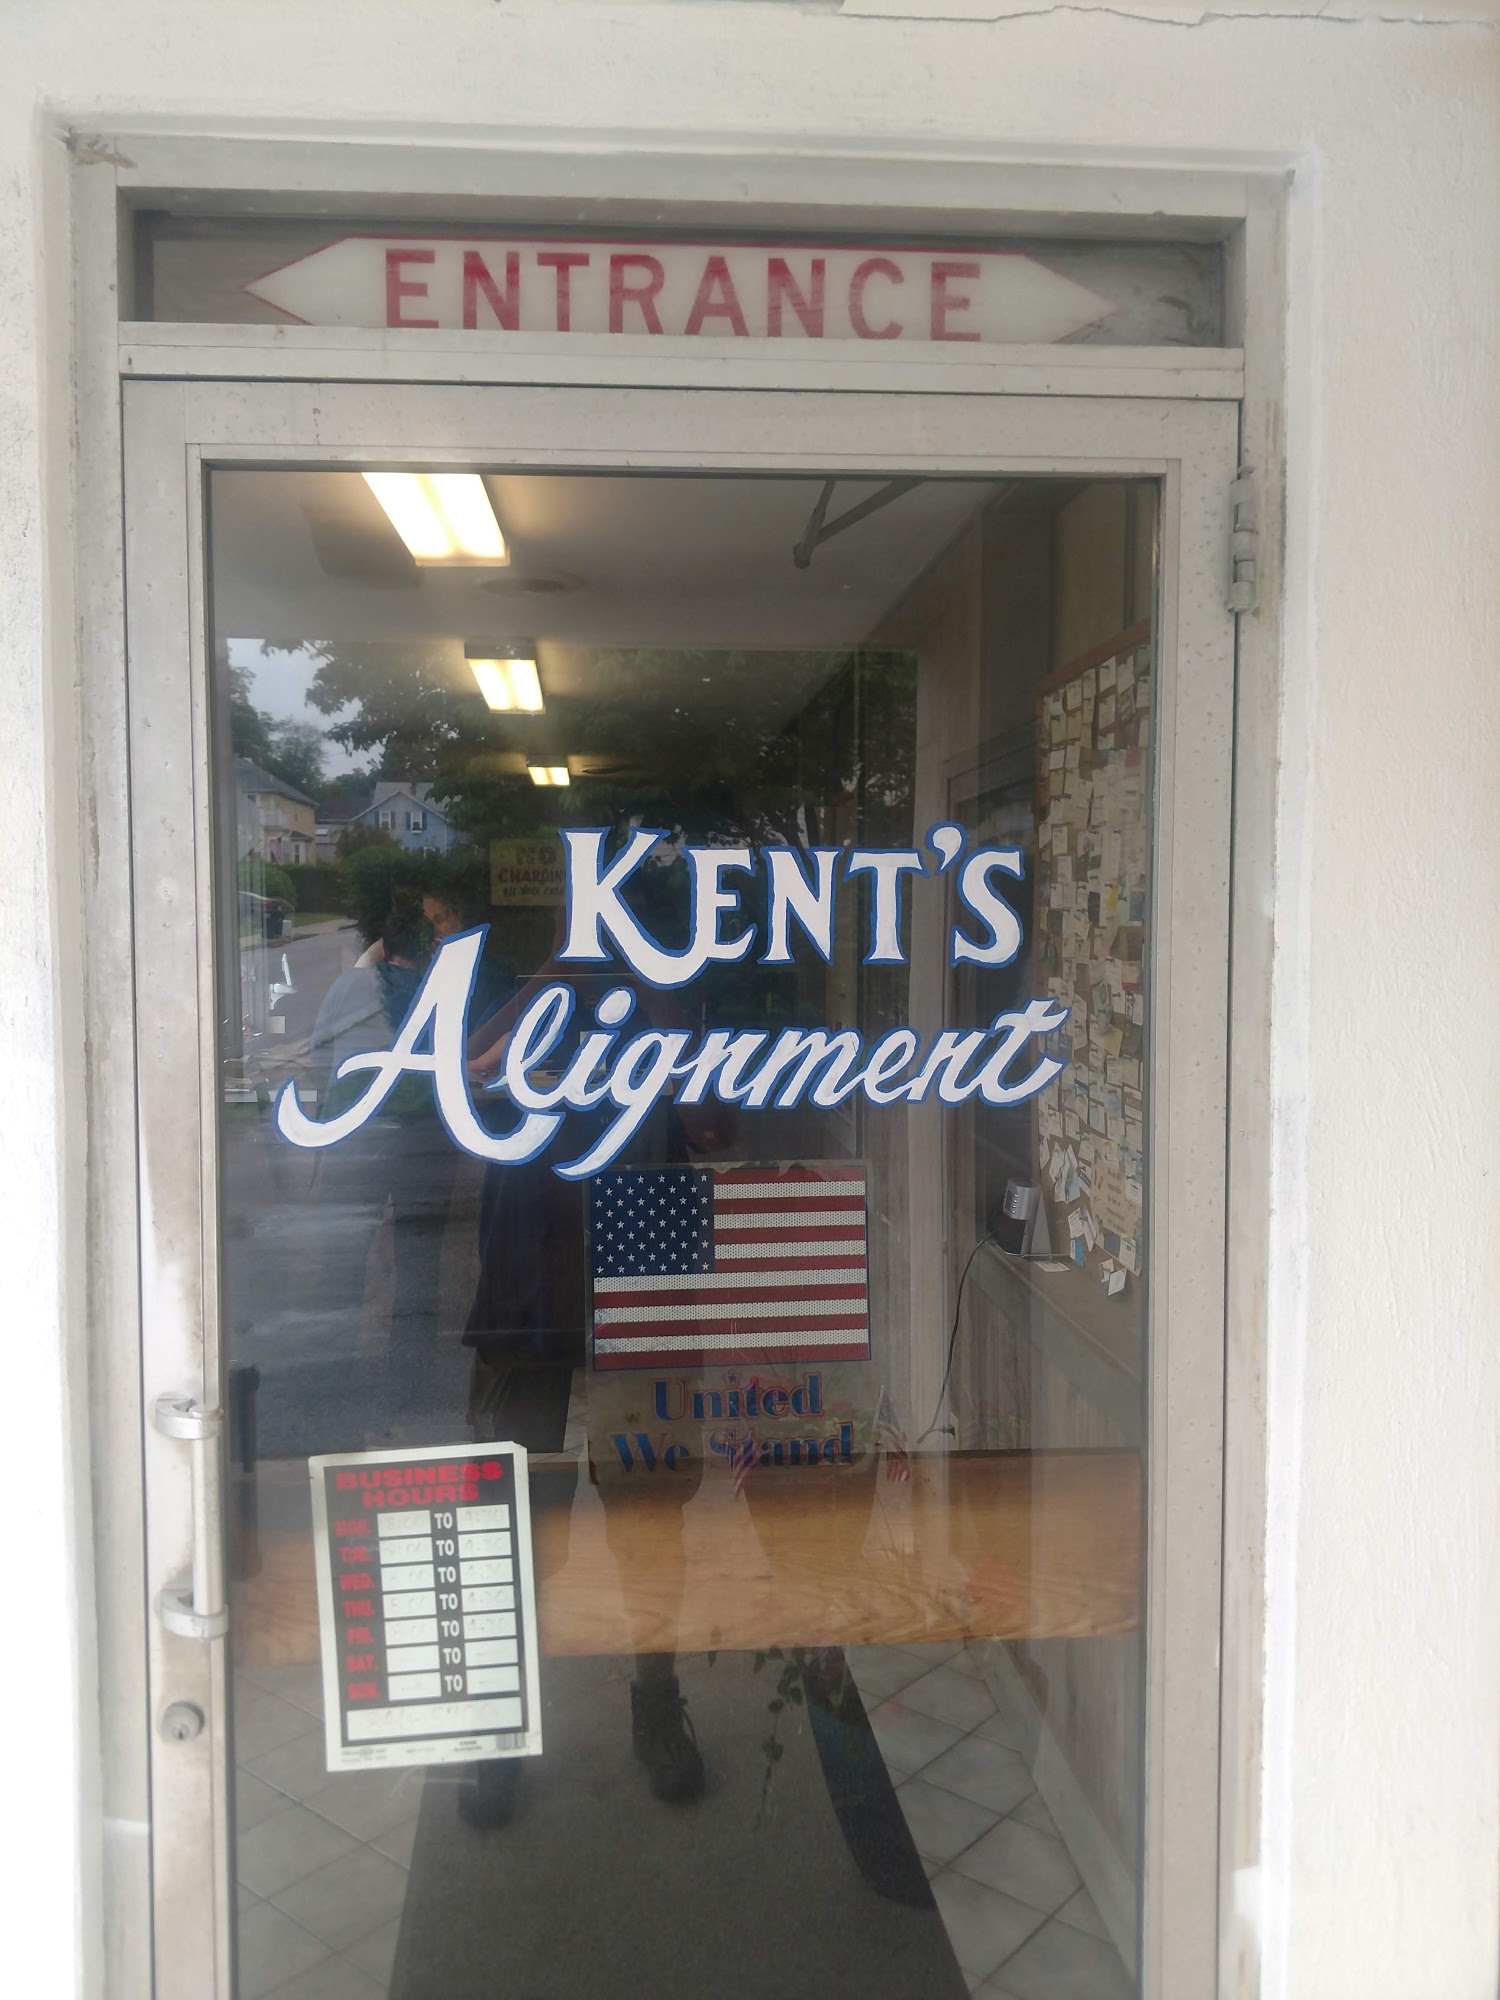 Kent's Alignment Services